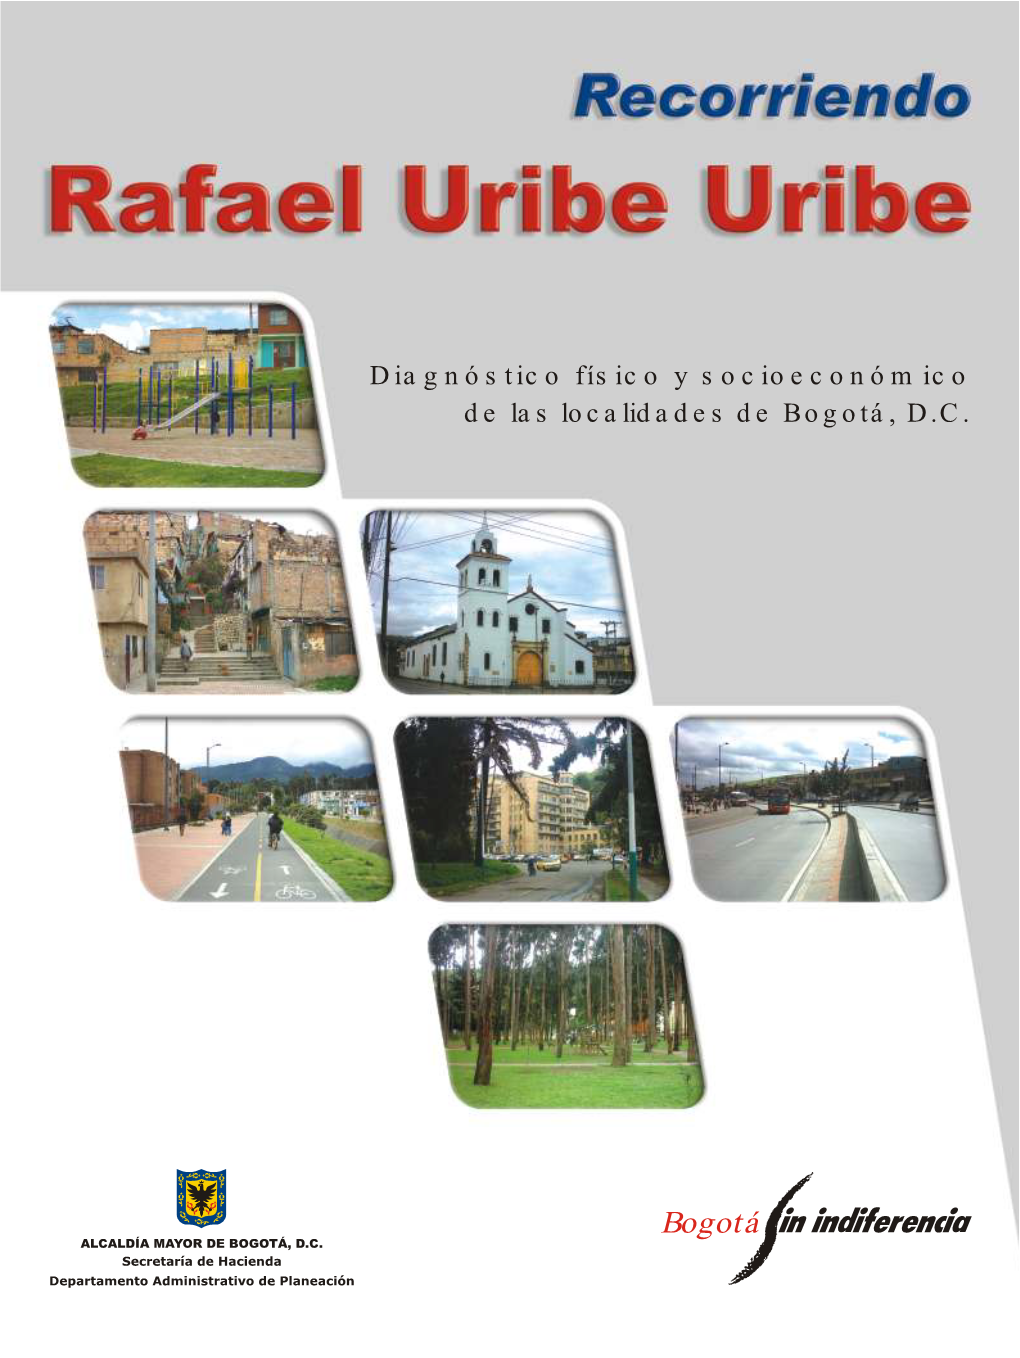 Recorriendo Rafael Uribe Uribe